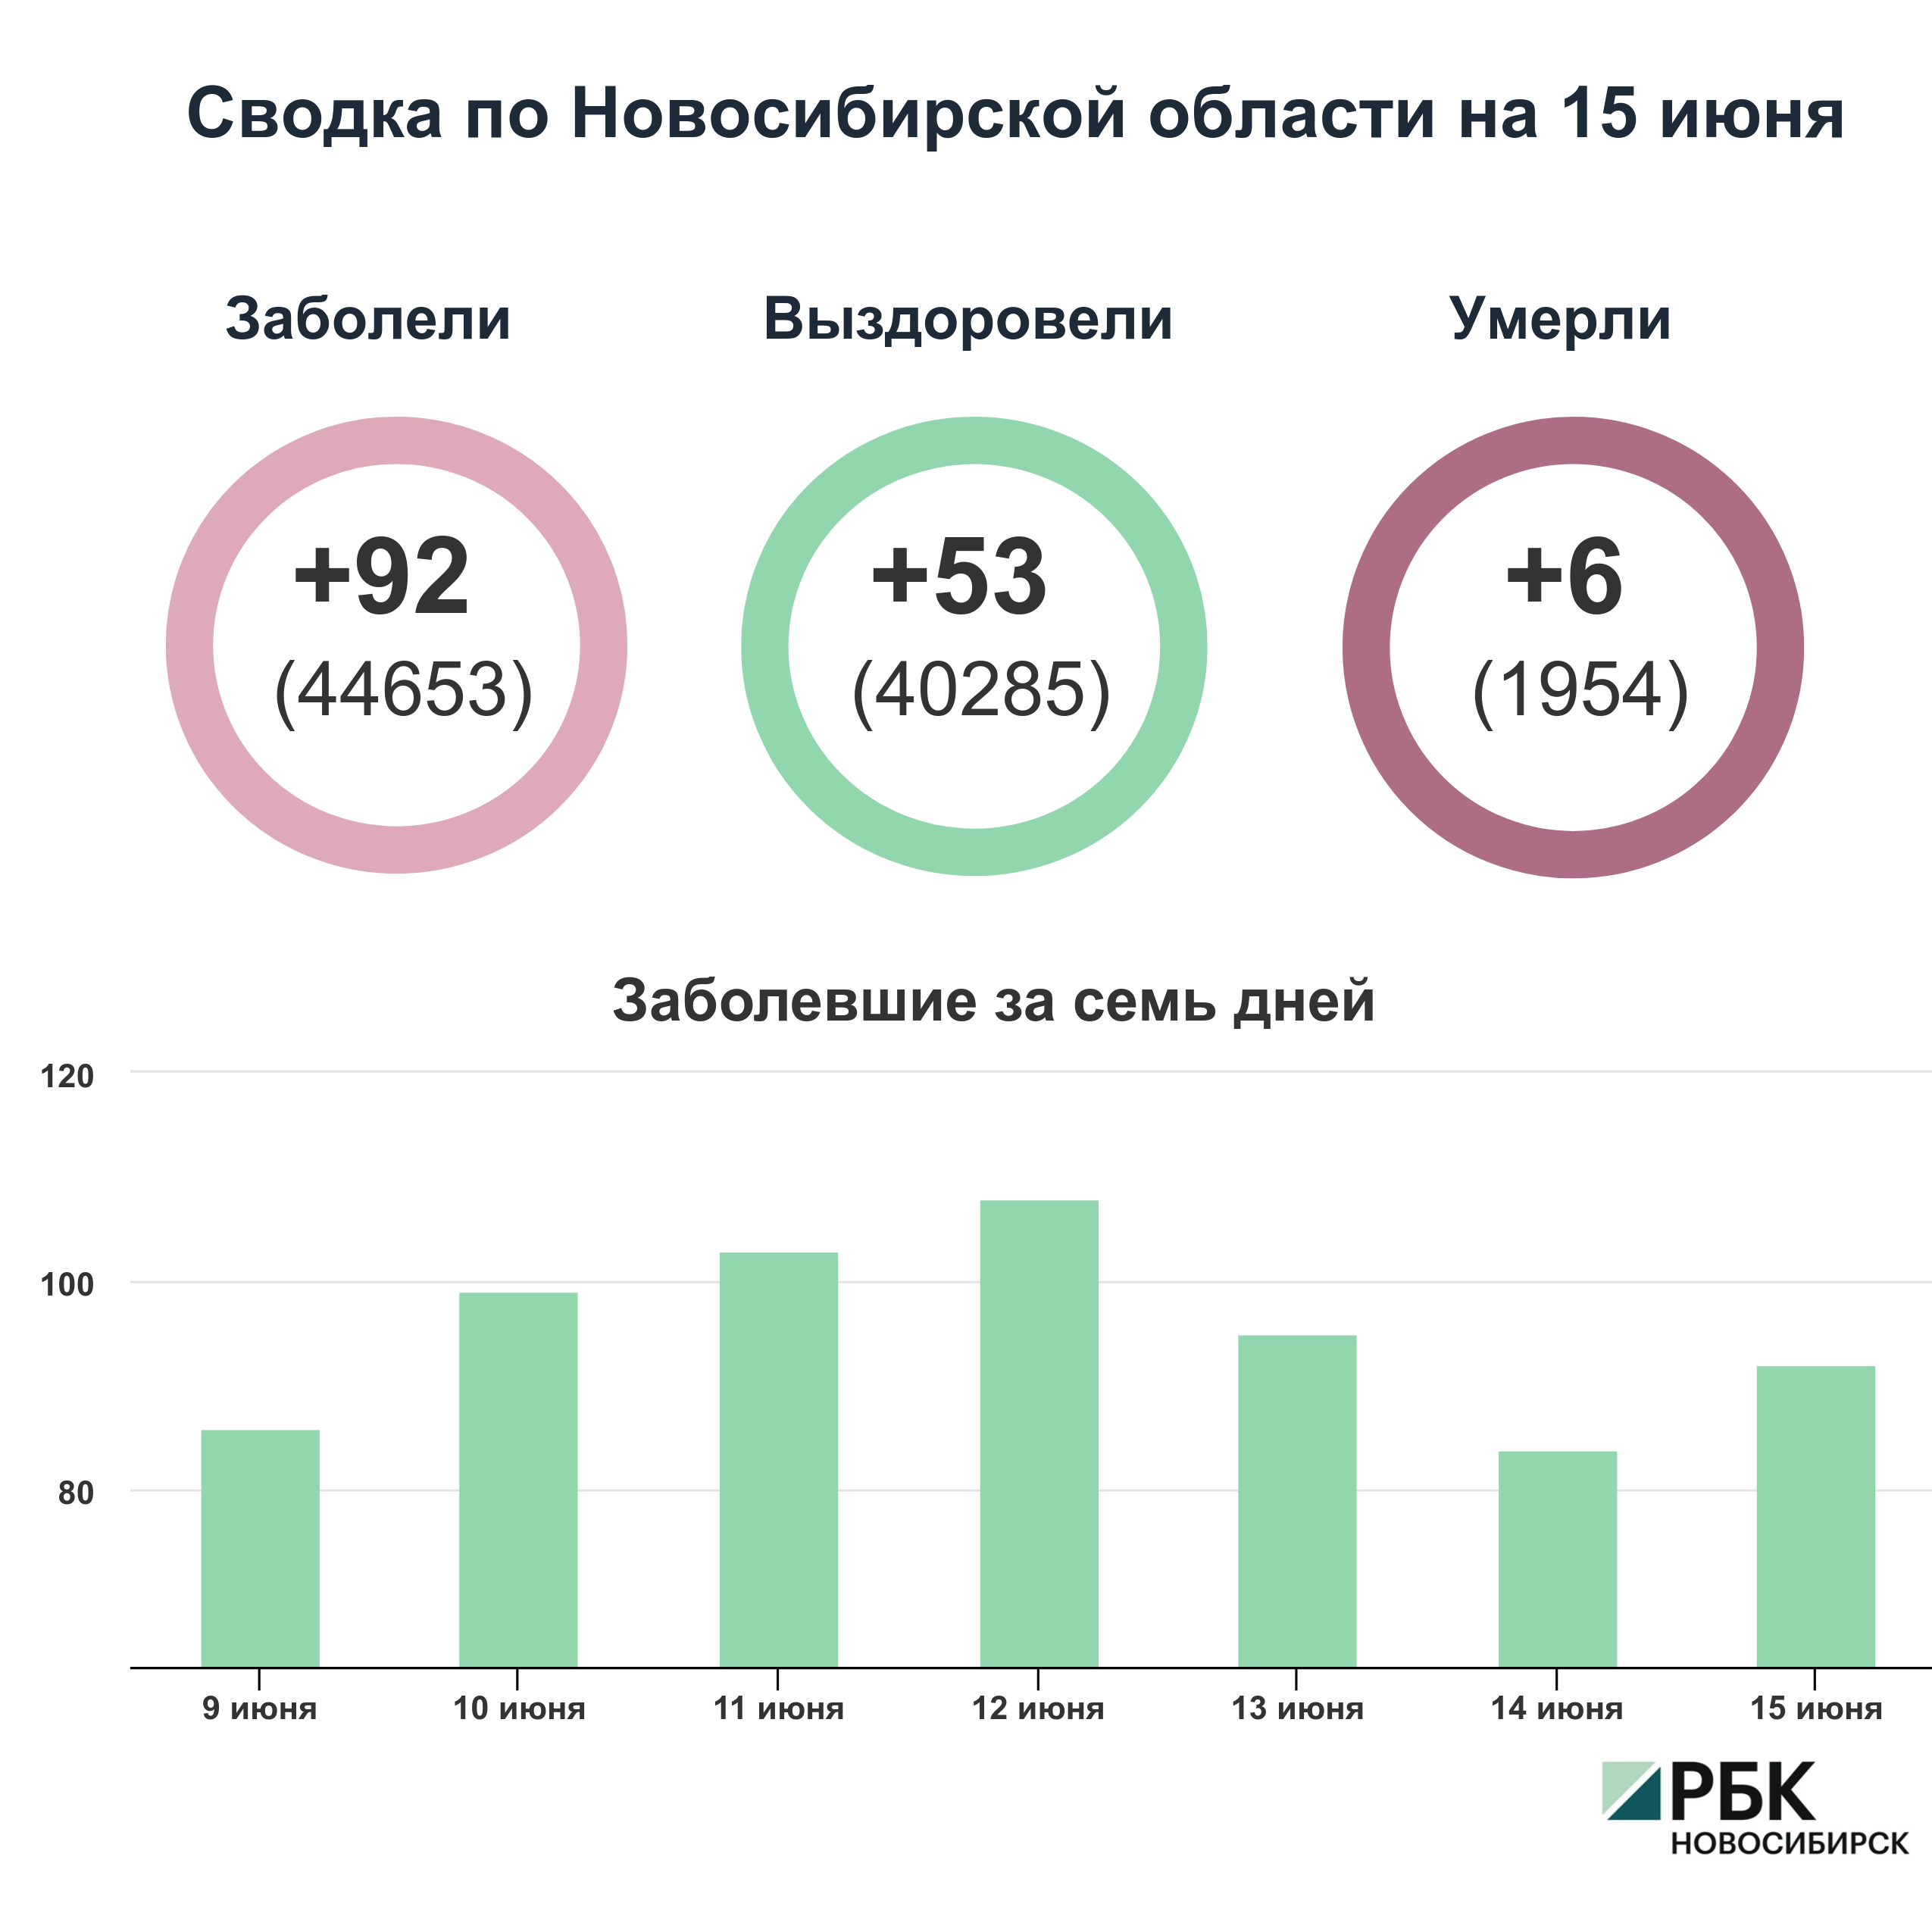 Коронавирус в Новосибирске: сводка на 15 июня